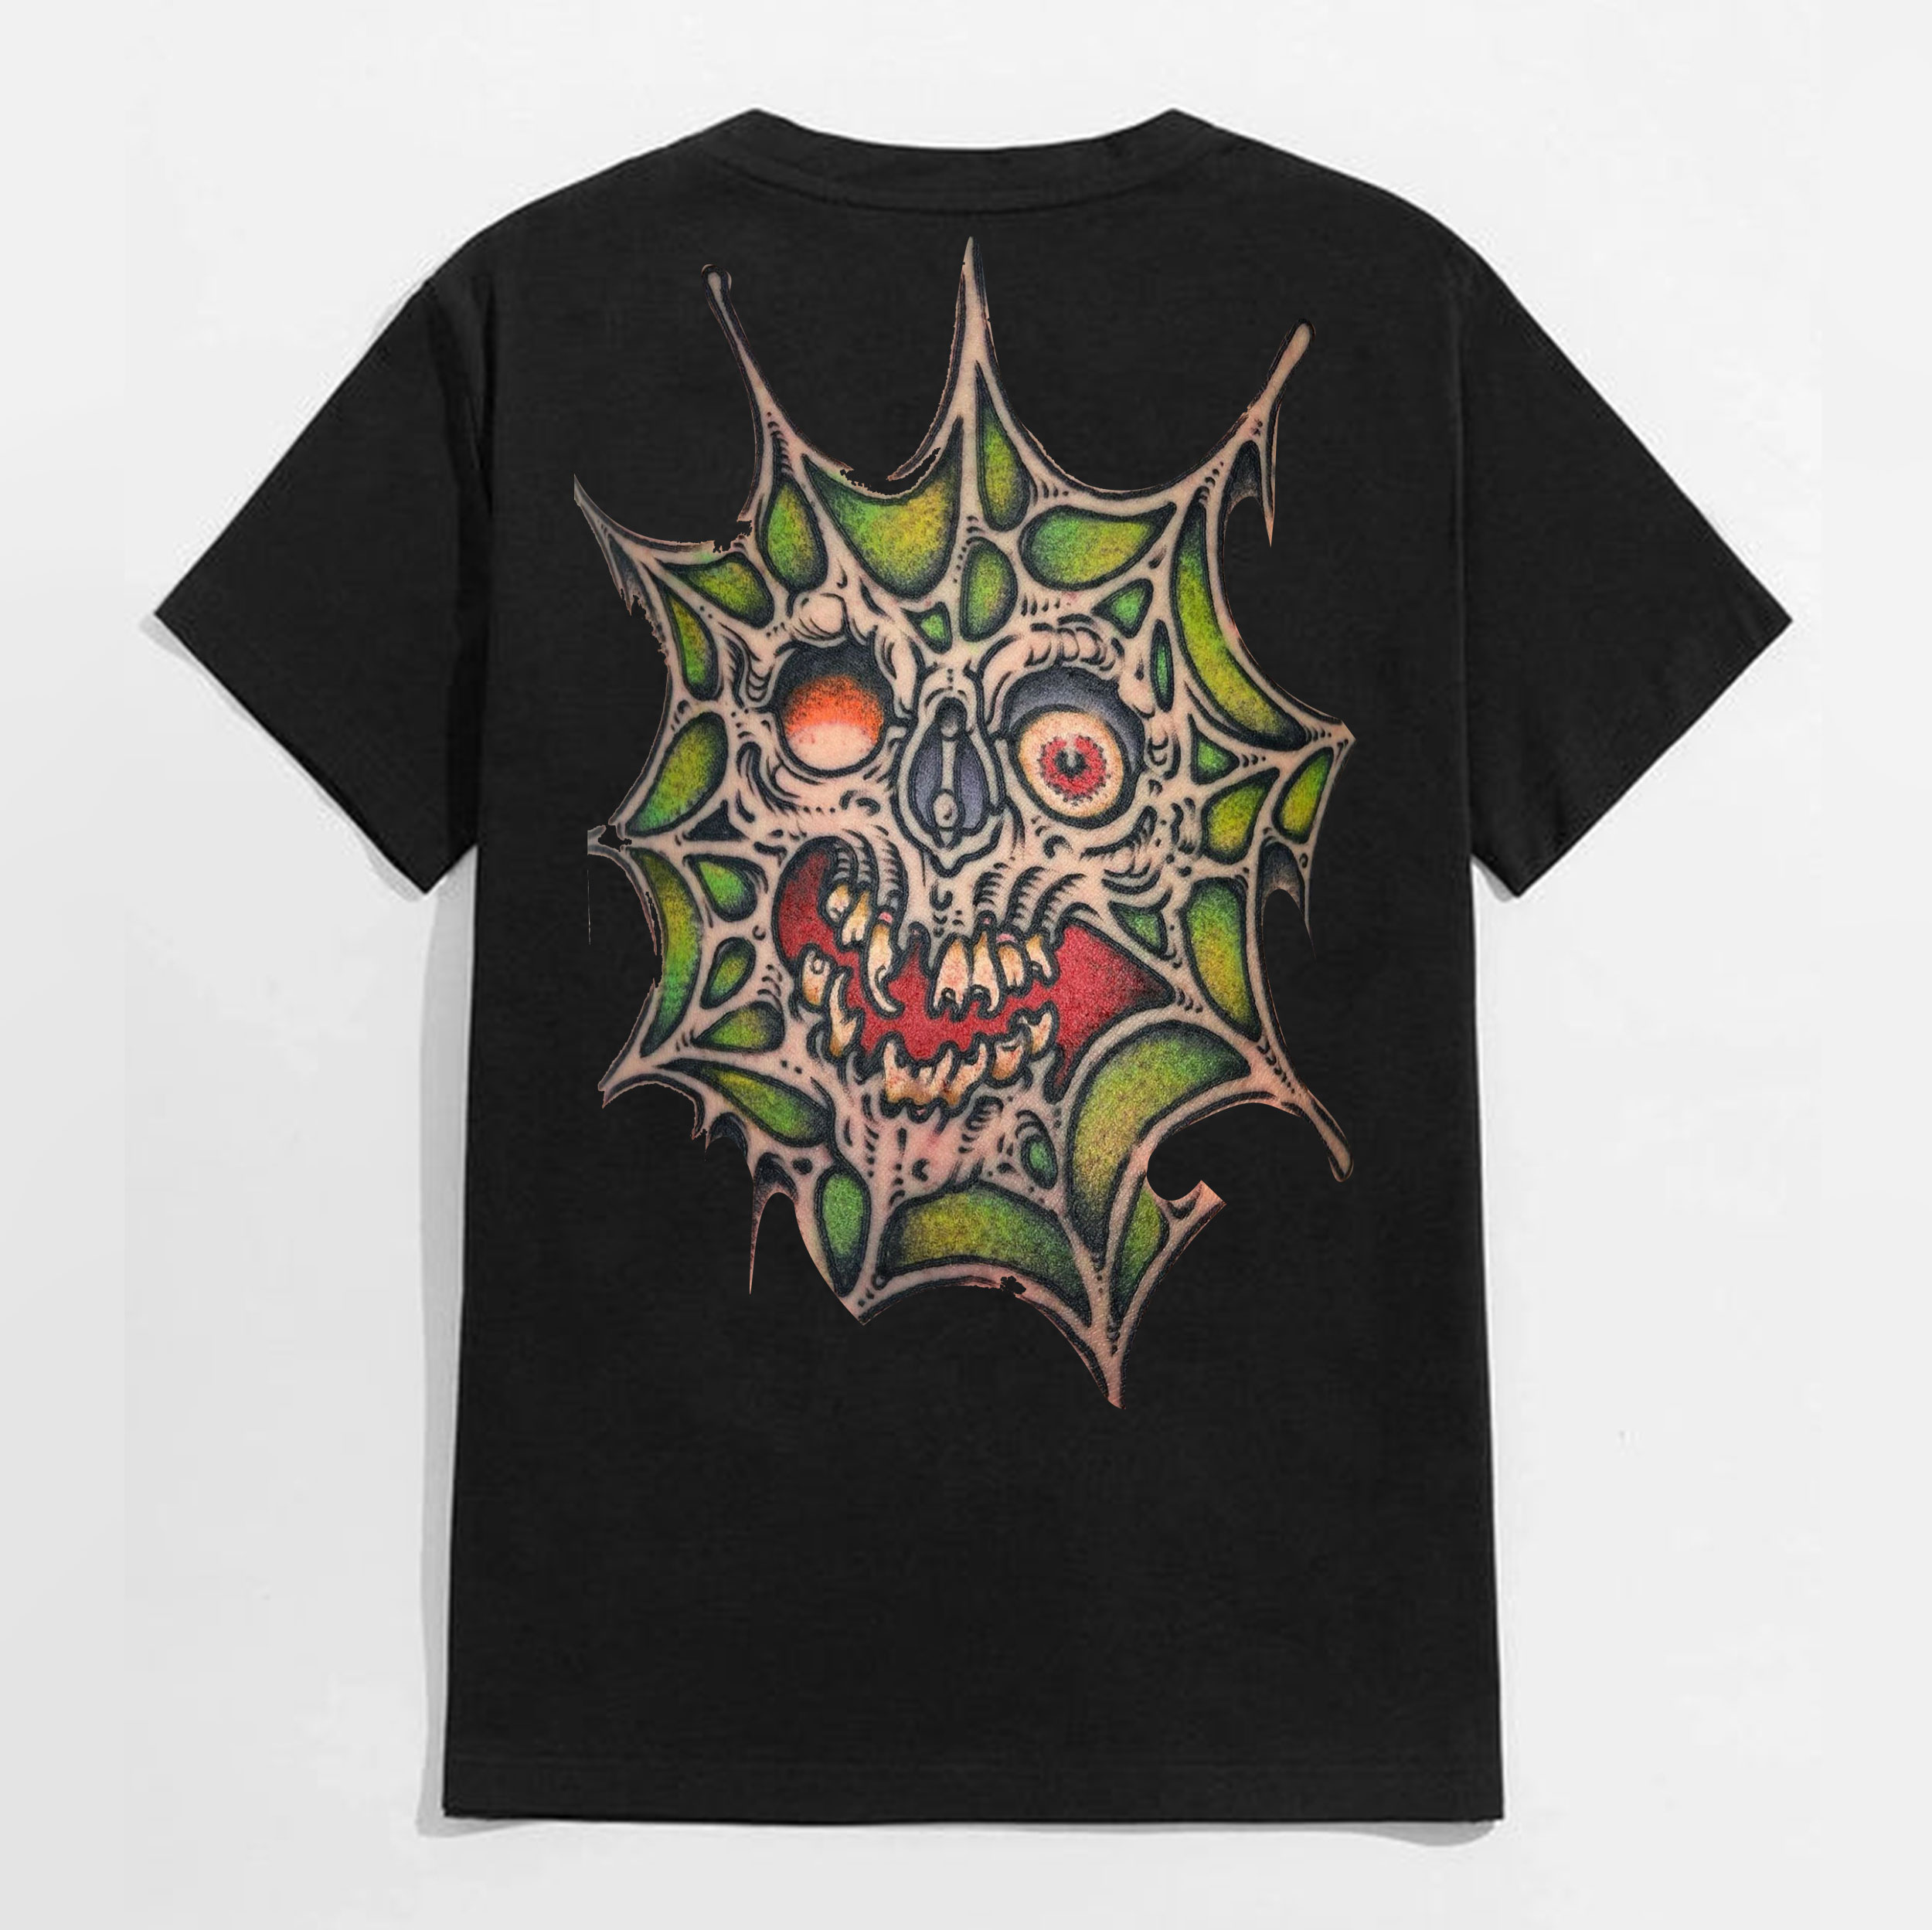 Skull in the Disgusting Item Black Print T-Shirt